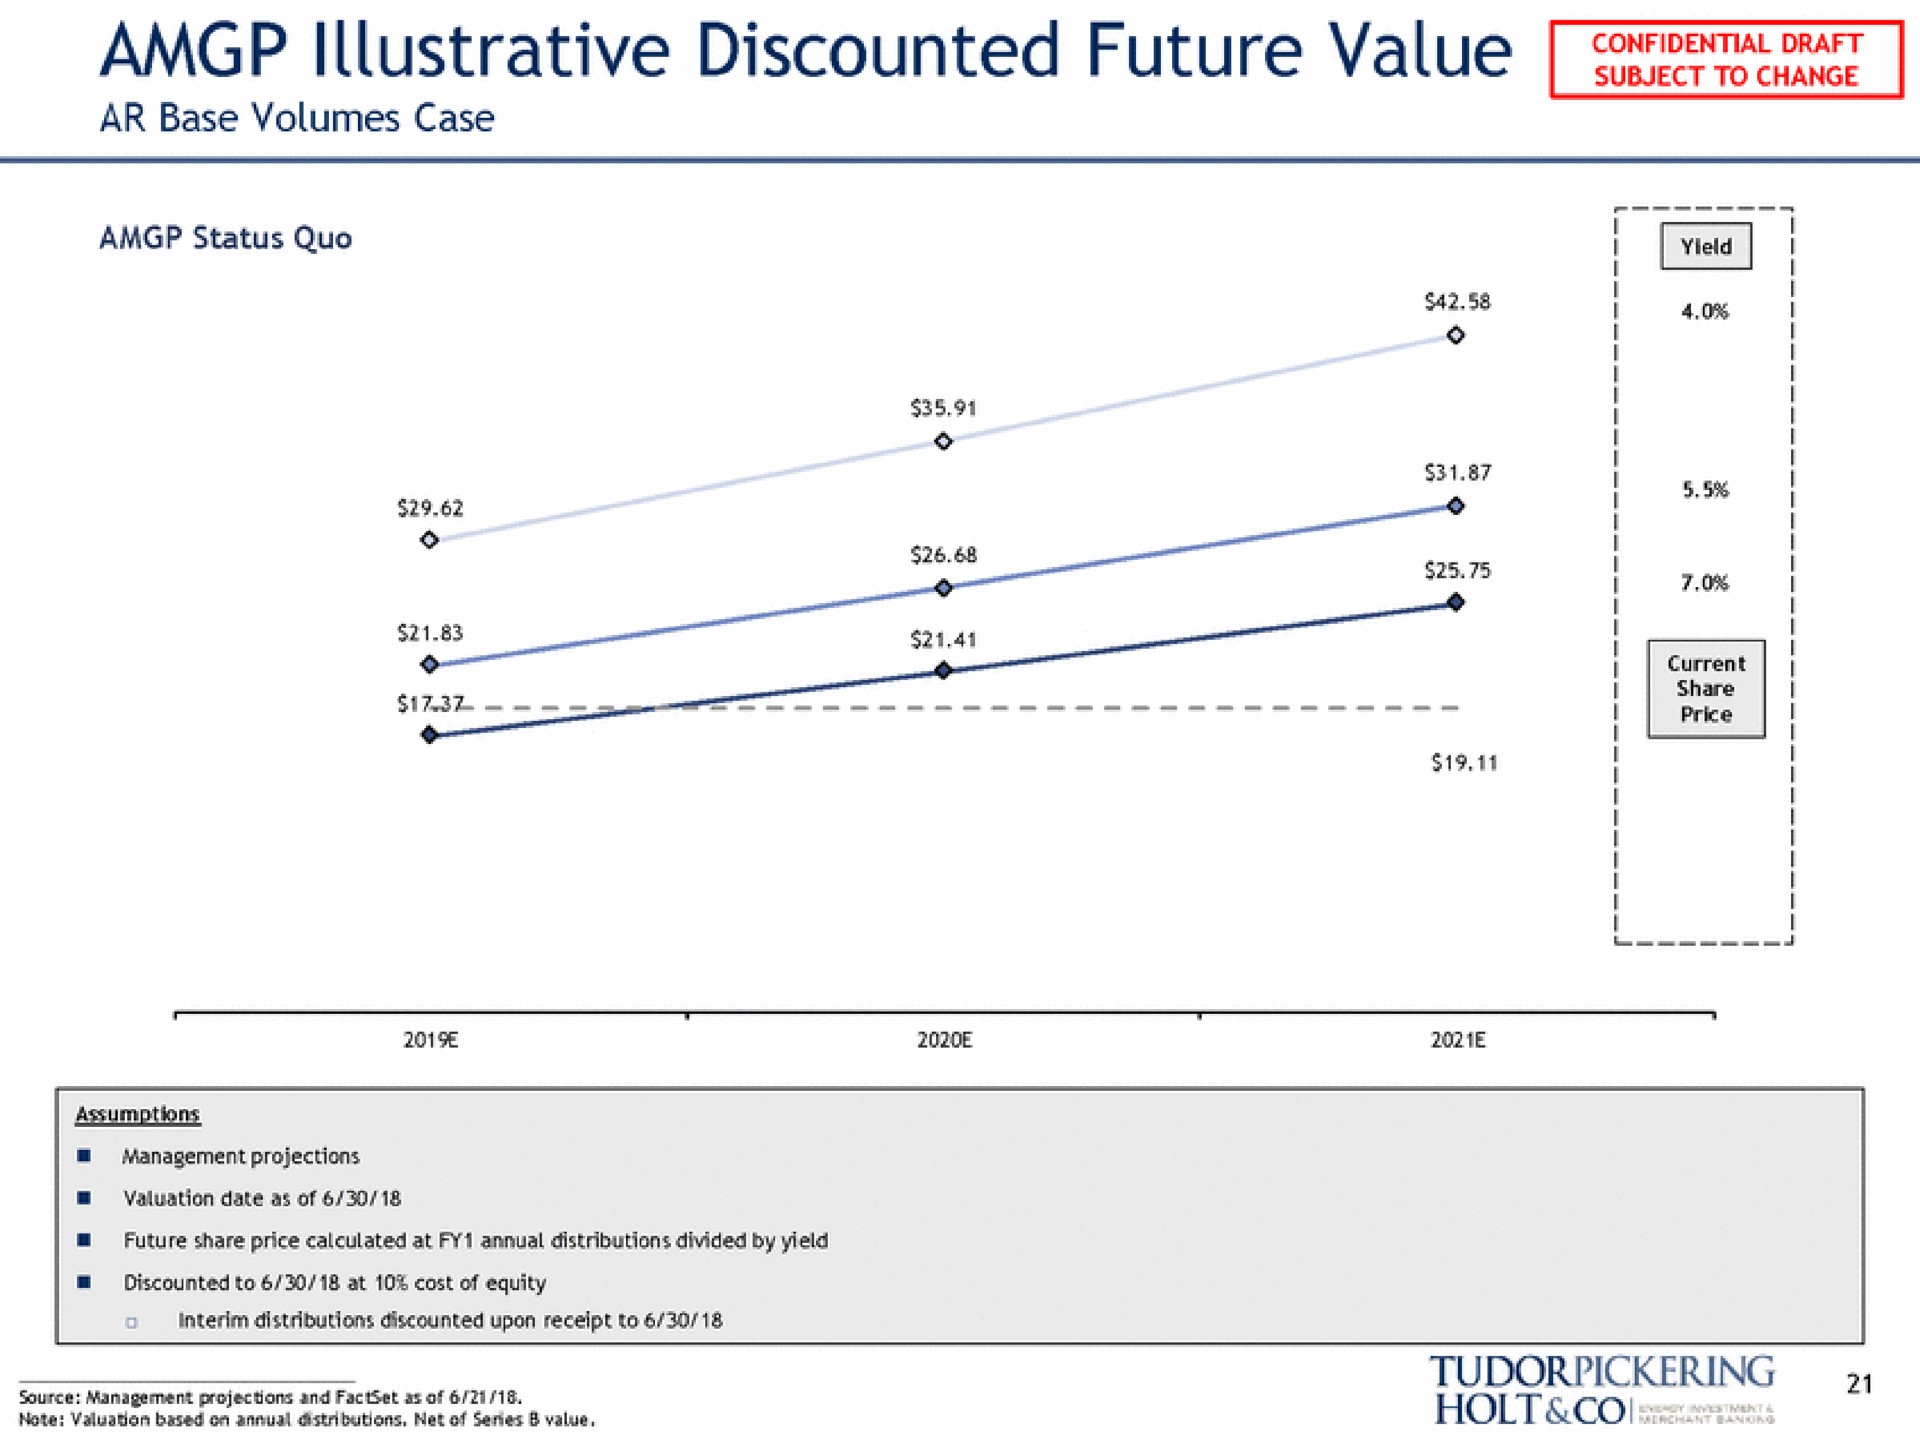 illustrative discounted future value ring | Tudor, Pickering, Holt & Co